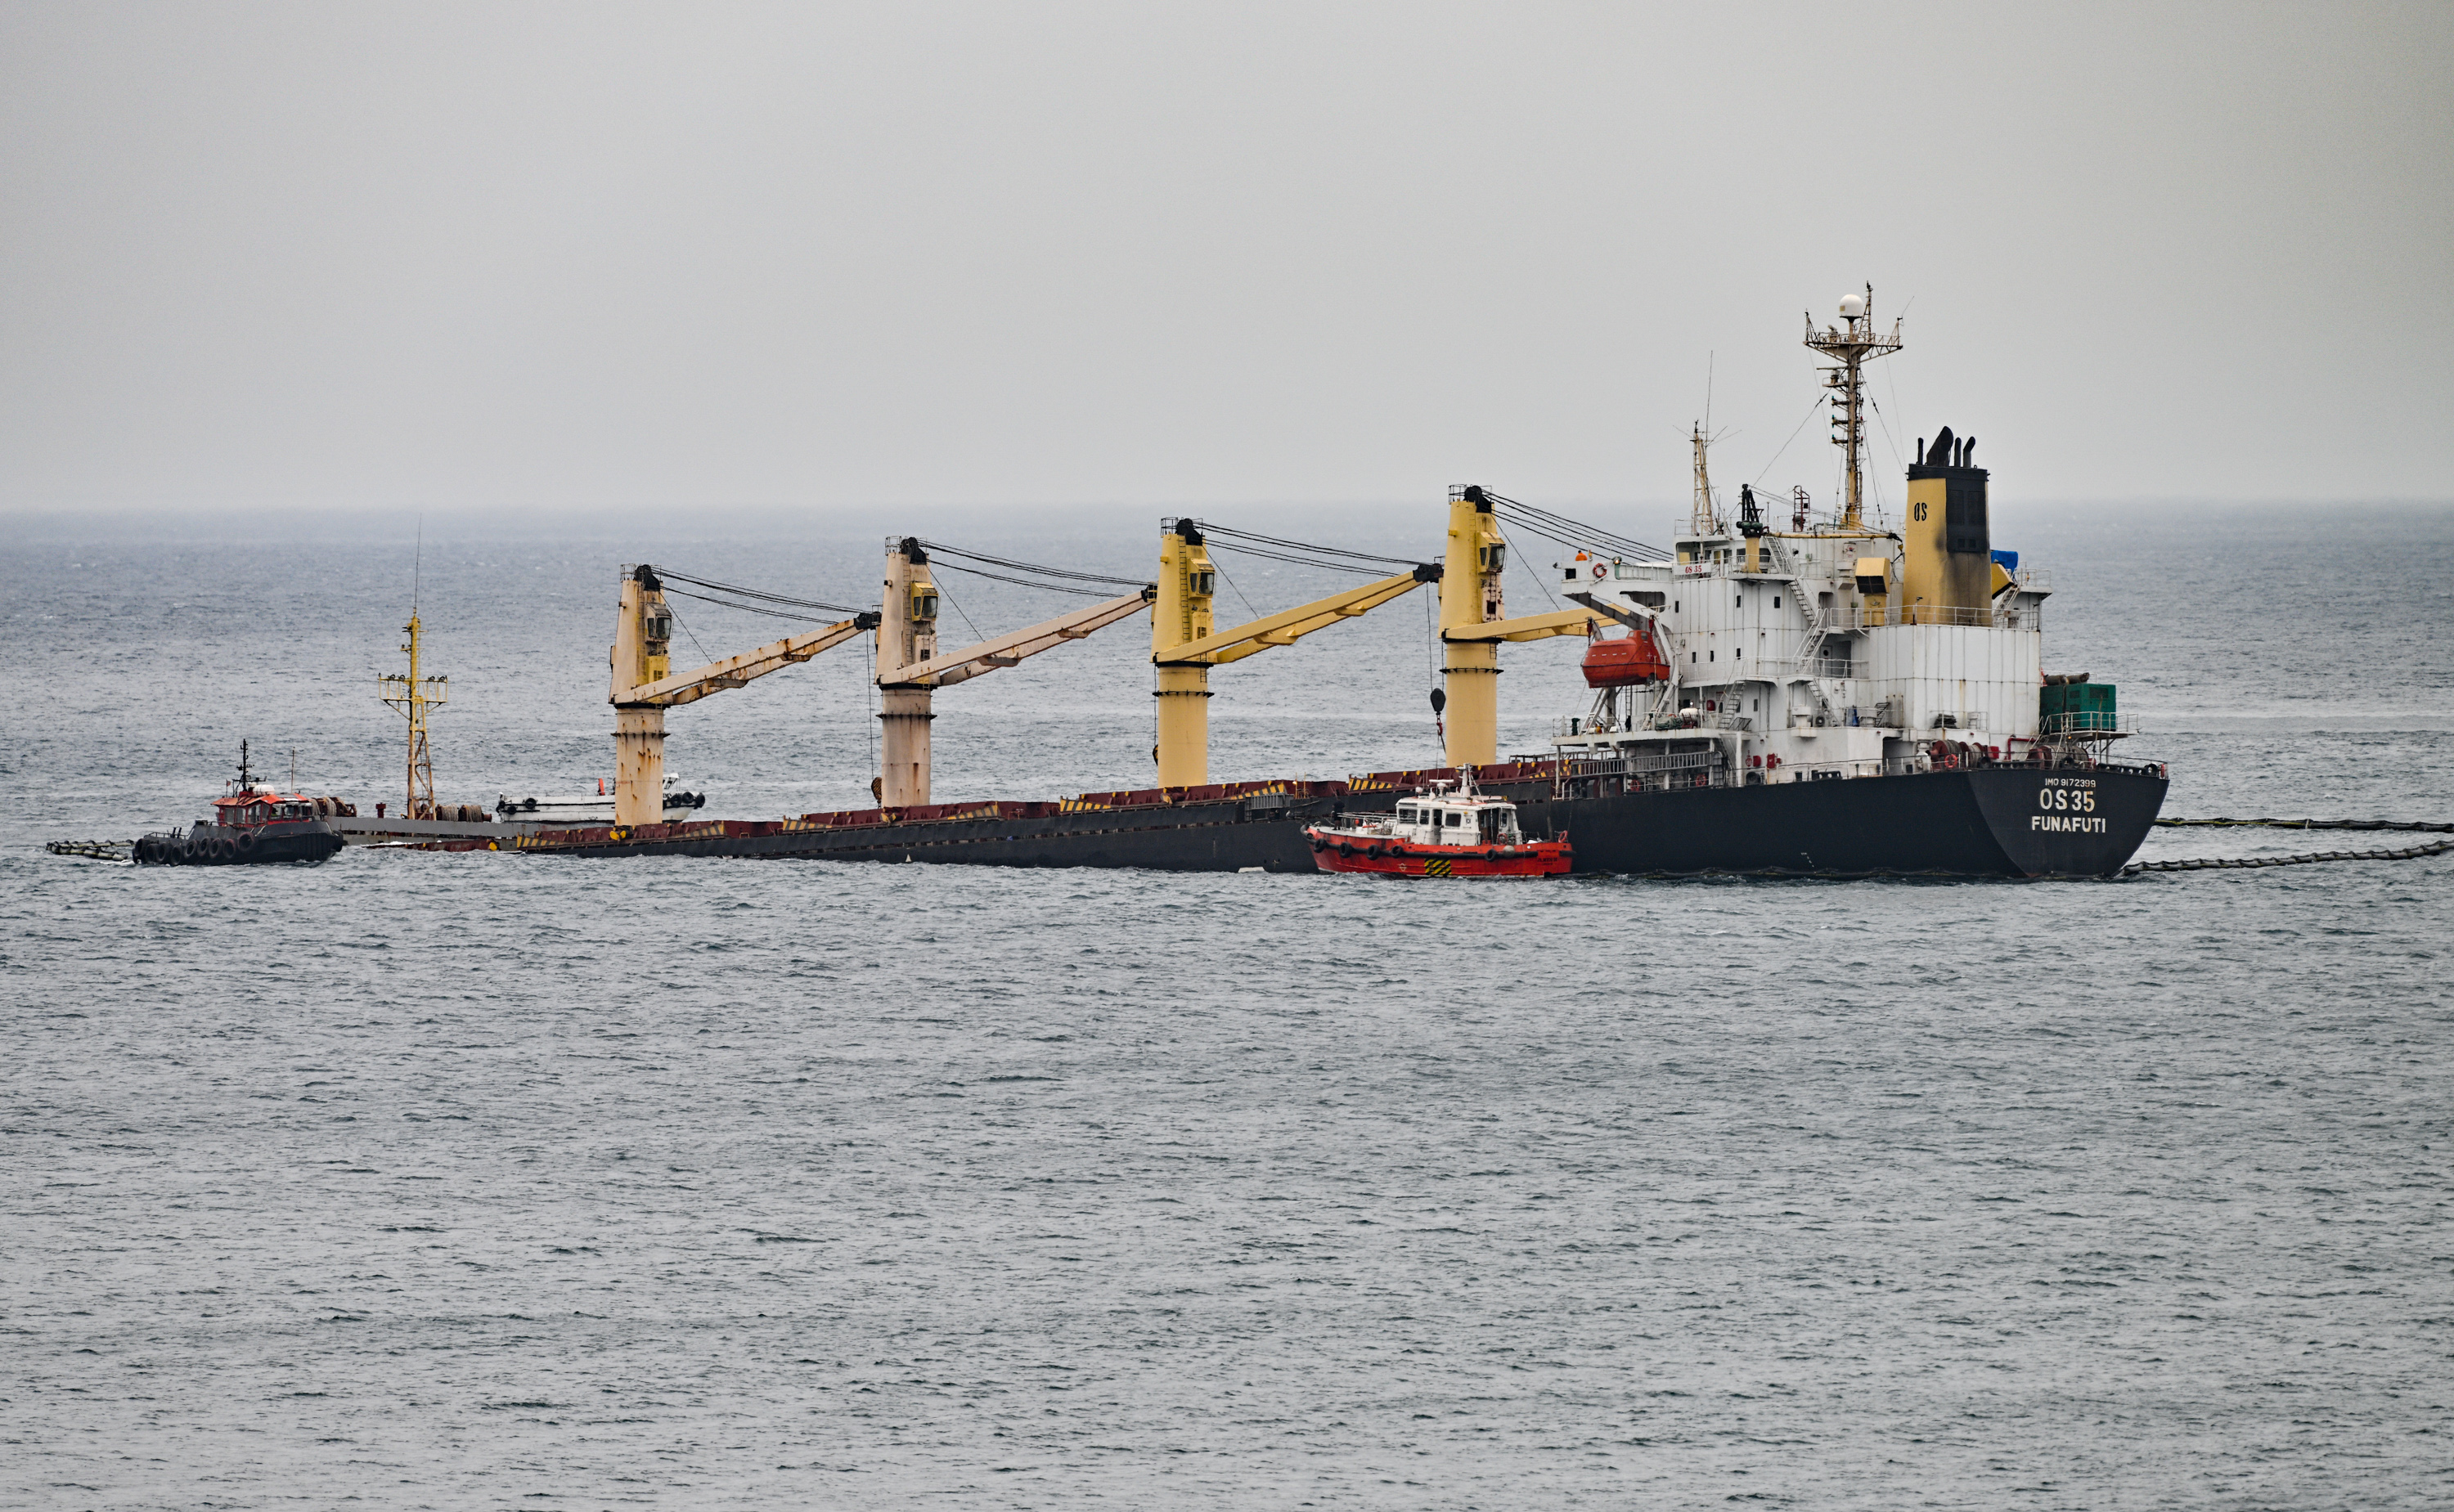 Resolve Marine rescue crafts alongside partially sunken bulk carrier OS-35.